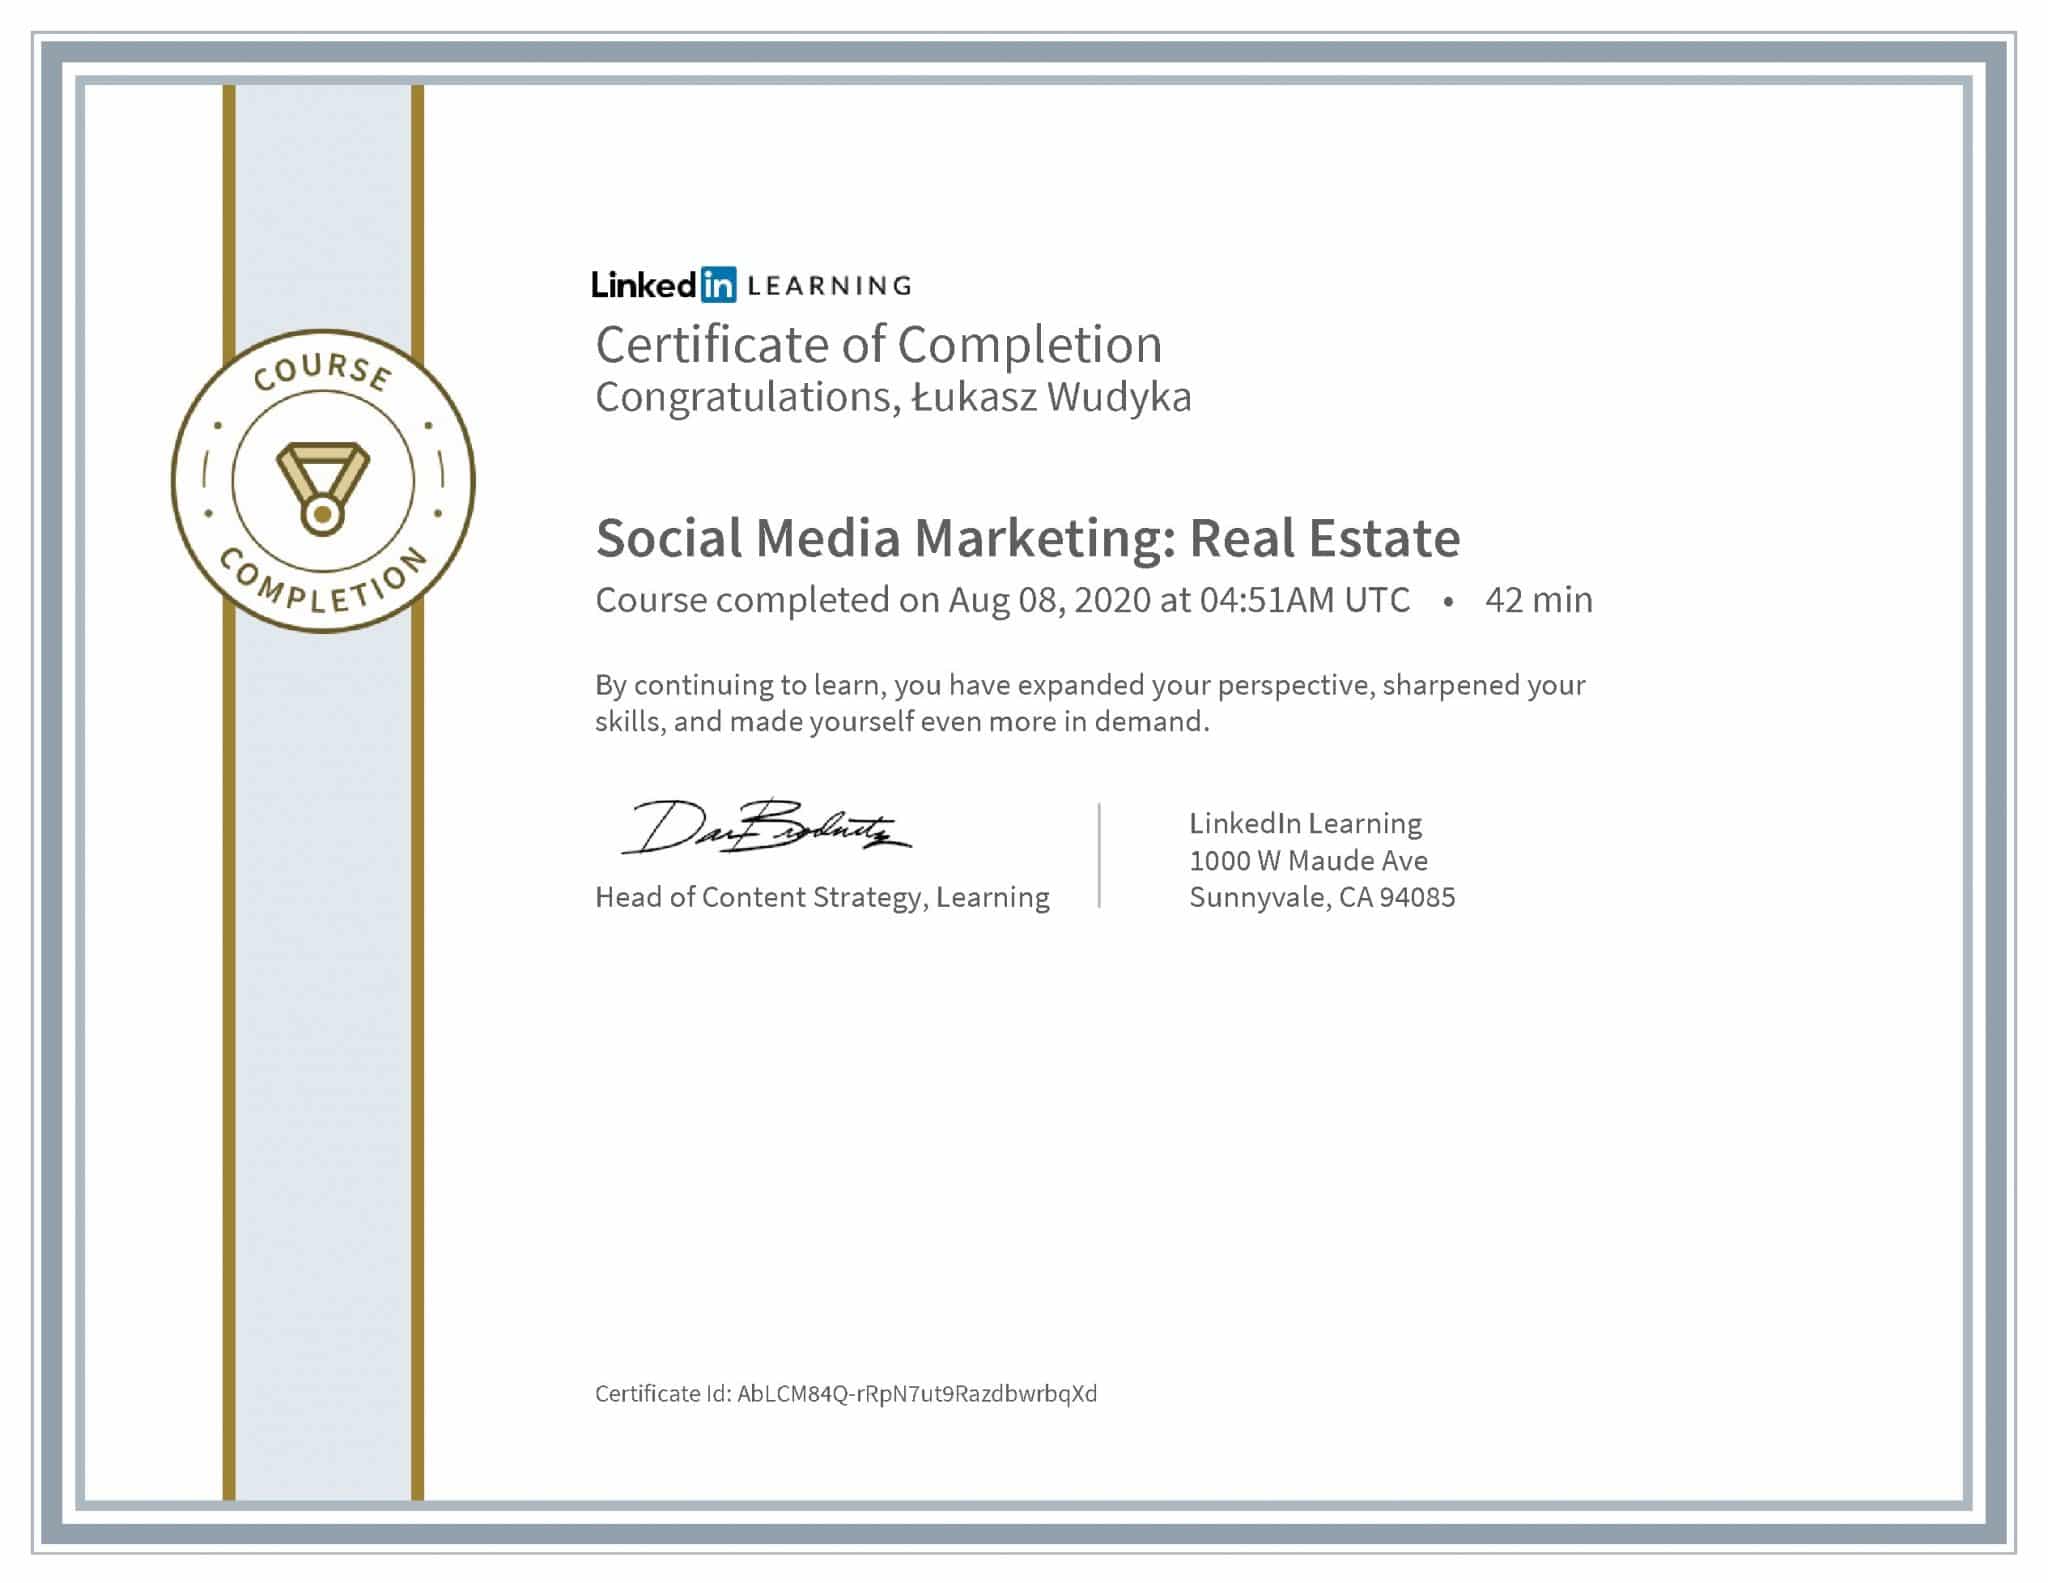 Łukasz Wudyka certyfikat LinkedIn Social Media Marketing: Real Estate